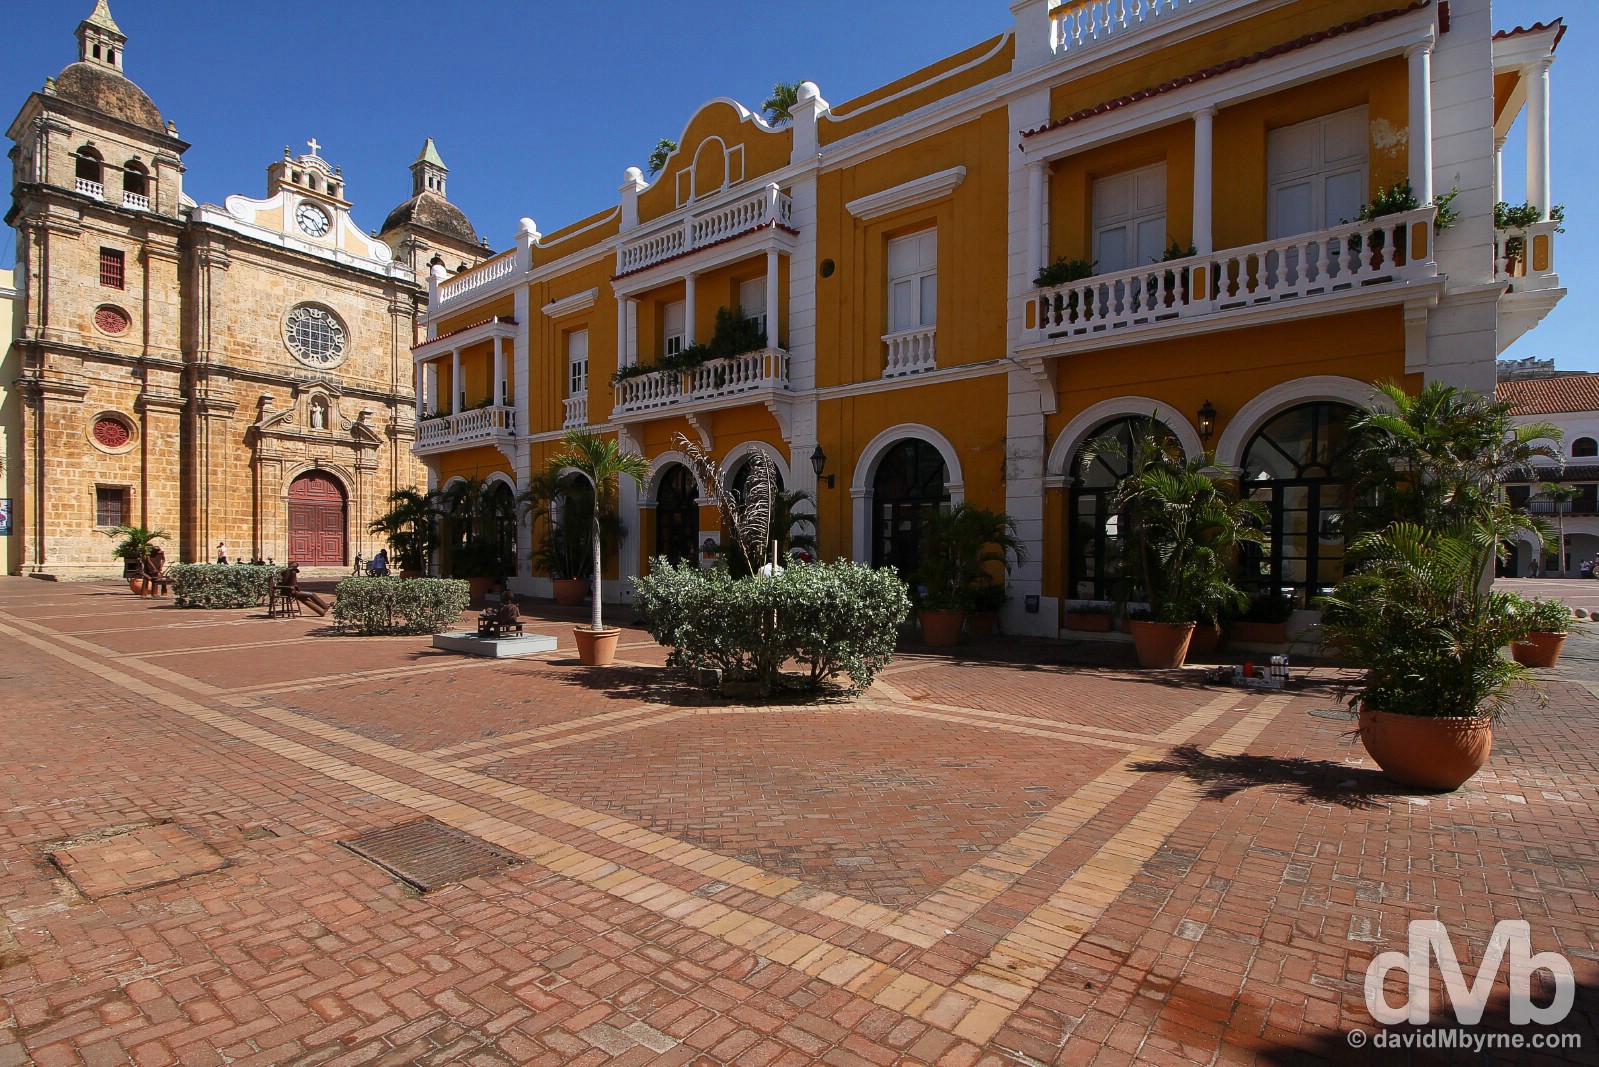 Colonial buildings, including the facade of Iglesia de San Pedro Claver, as seen from the corner of Plaza de la Aduana in Old Town Cartagena, Colombia. June 25, 2015.